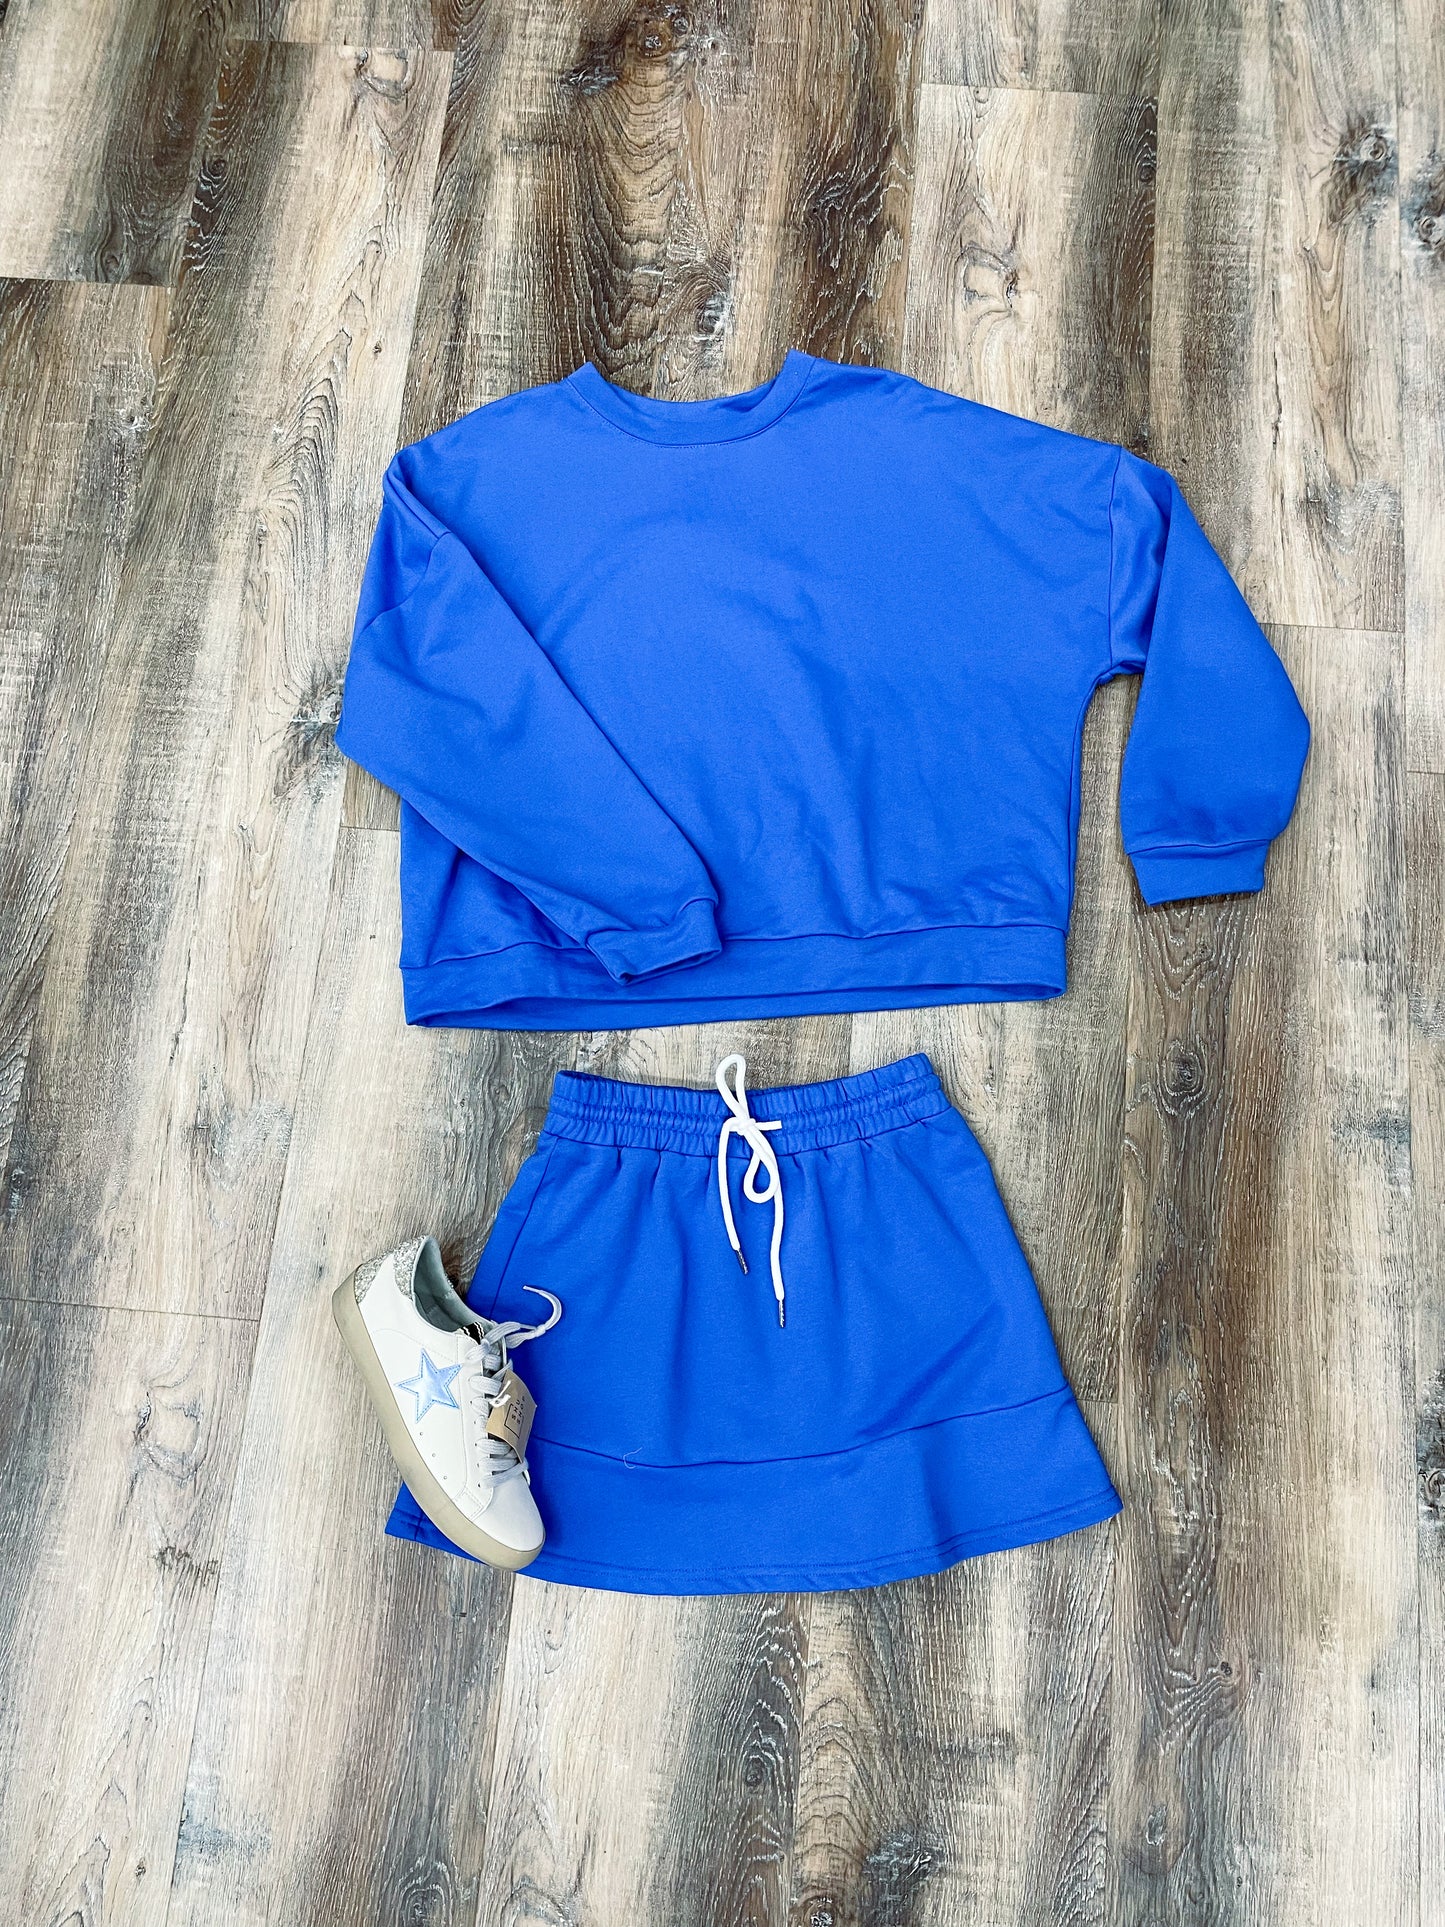 Believing Blue - Sweatshirt and Skirt Set